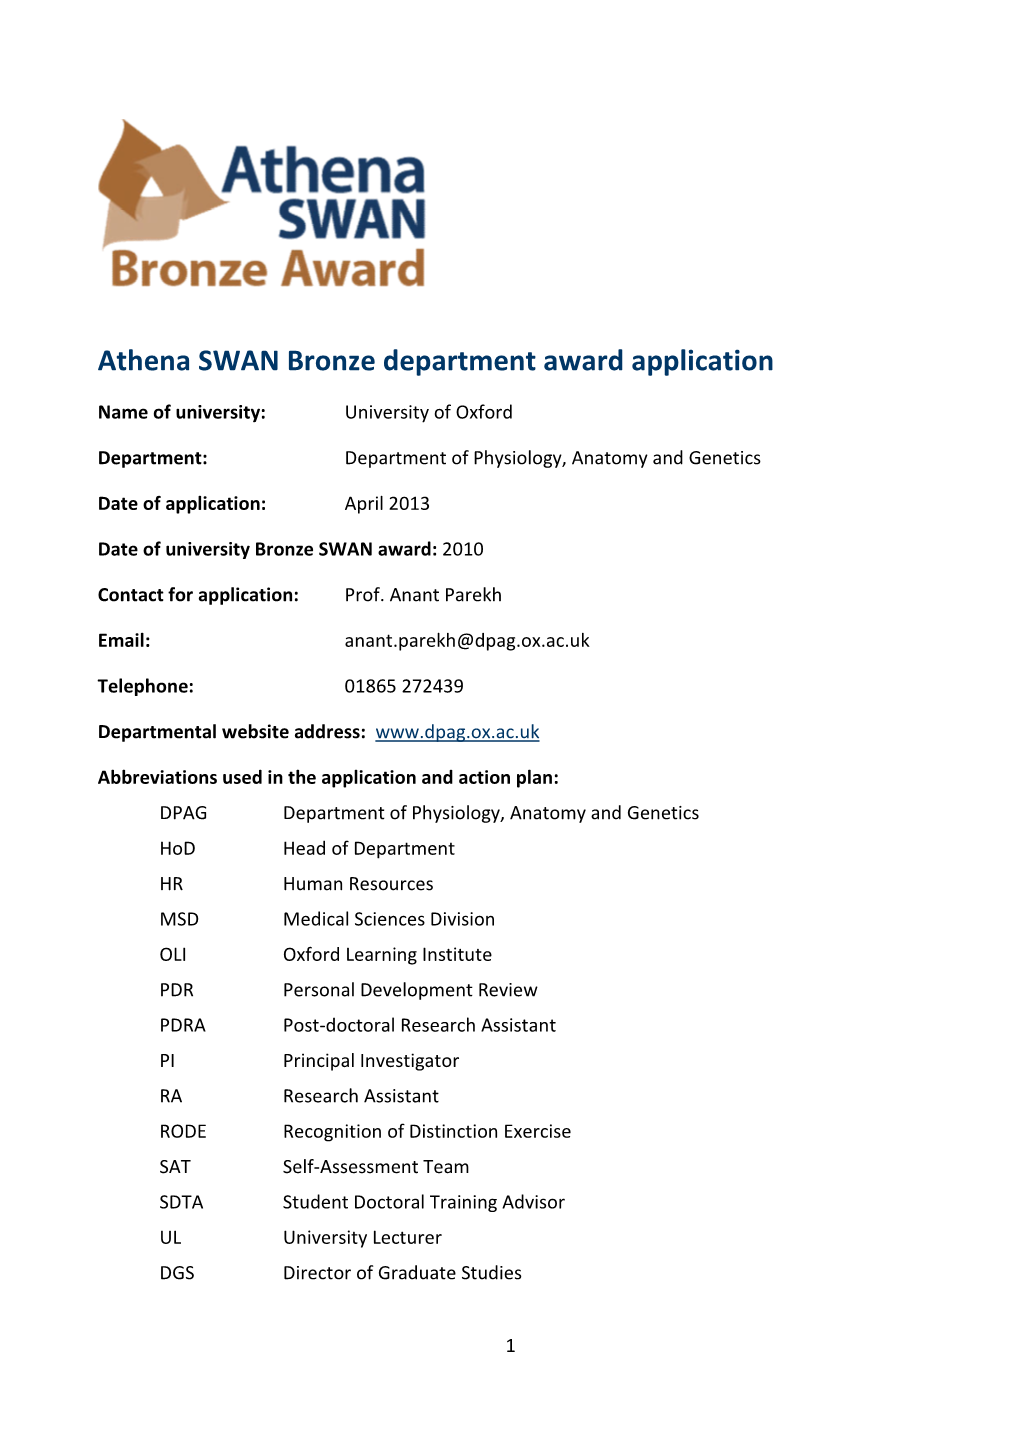 Athena SWAN Bronze Department Award Application